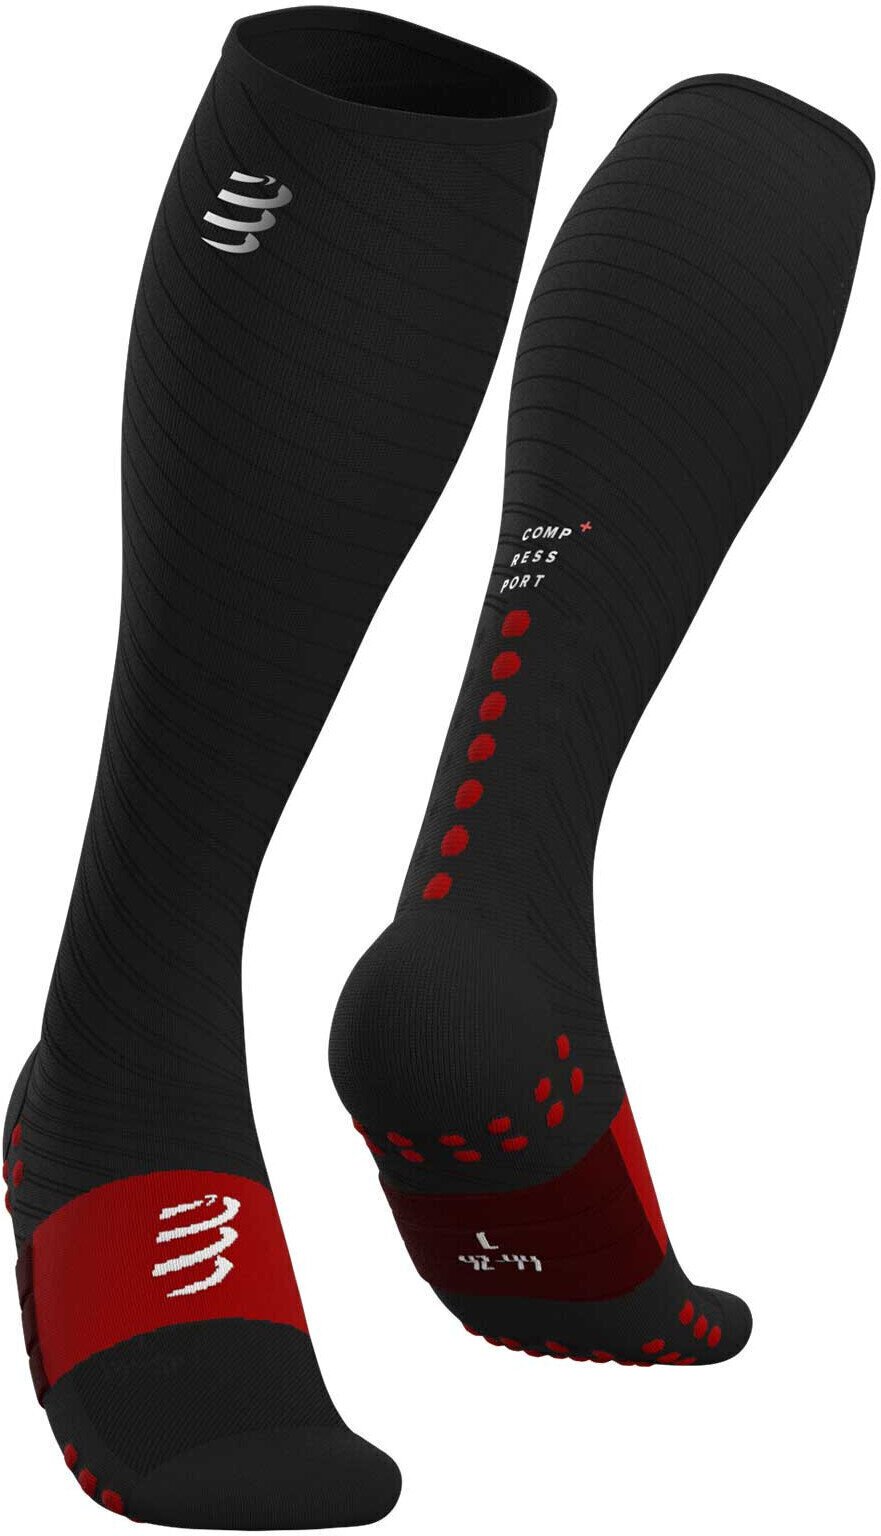 Skarpety do biegania
 Compressport Full Socks Recovery Black 2M Skarpety do biegania